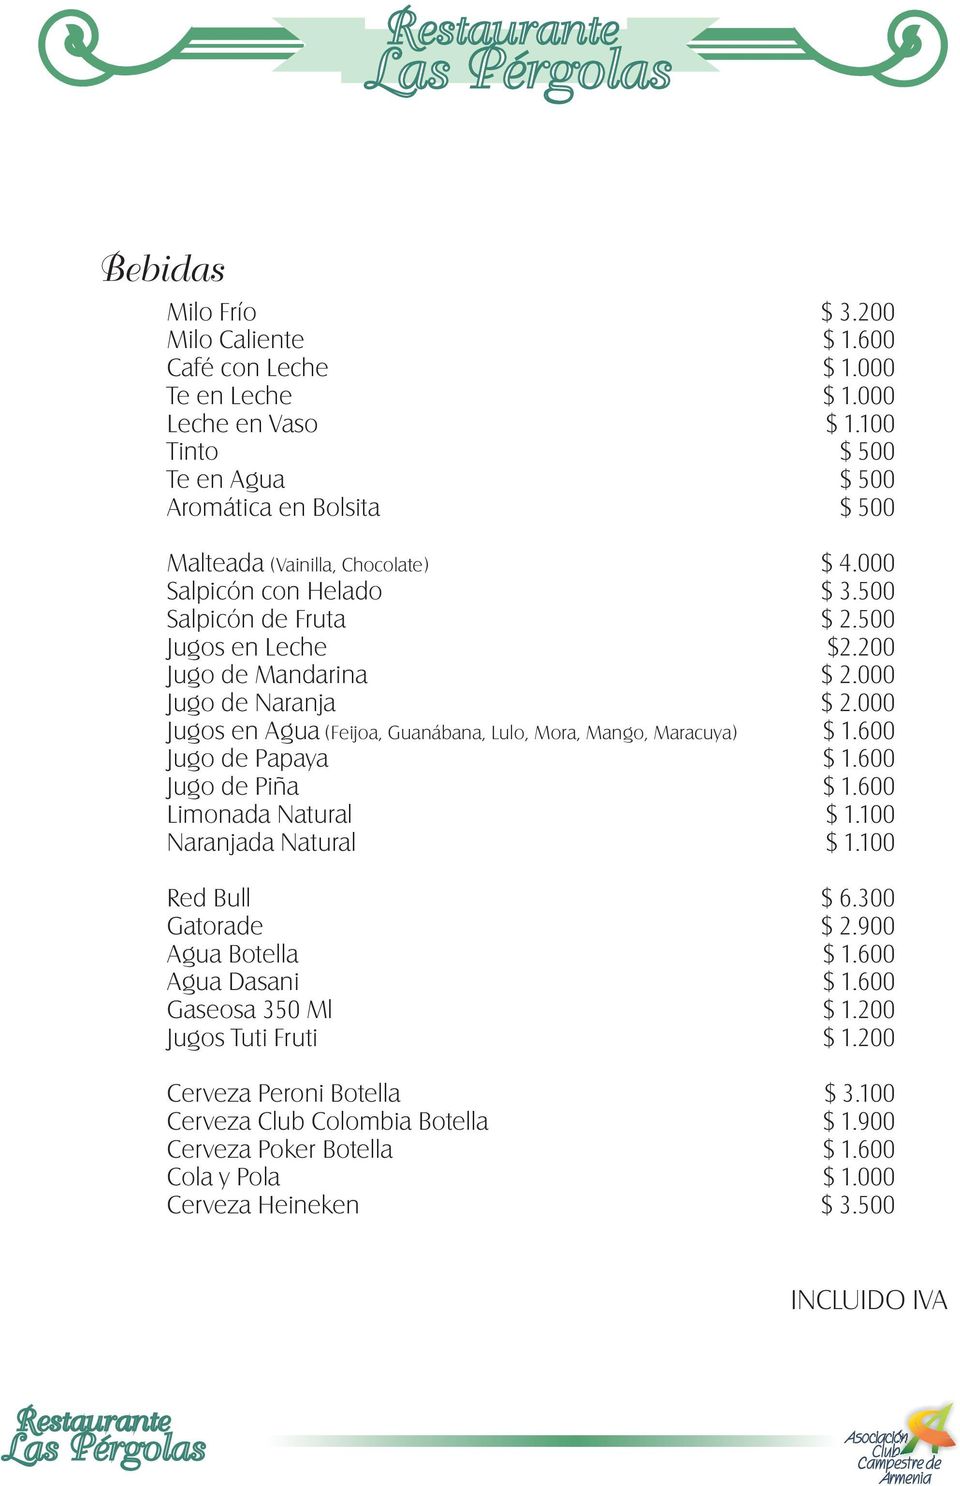 200 Jugo de Mandarina $ 2.000 Jugo de Naranja $ 2.000 Jugos en Agua (Feijoa, Guanábana, Lulo, Mora, Mango, Maracuya) $ 1.600 Jugo de Papaya $ 1.600 Jugo de Piña $ 1.600 Limonada Natural $ 1.